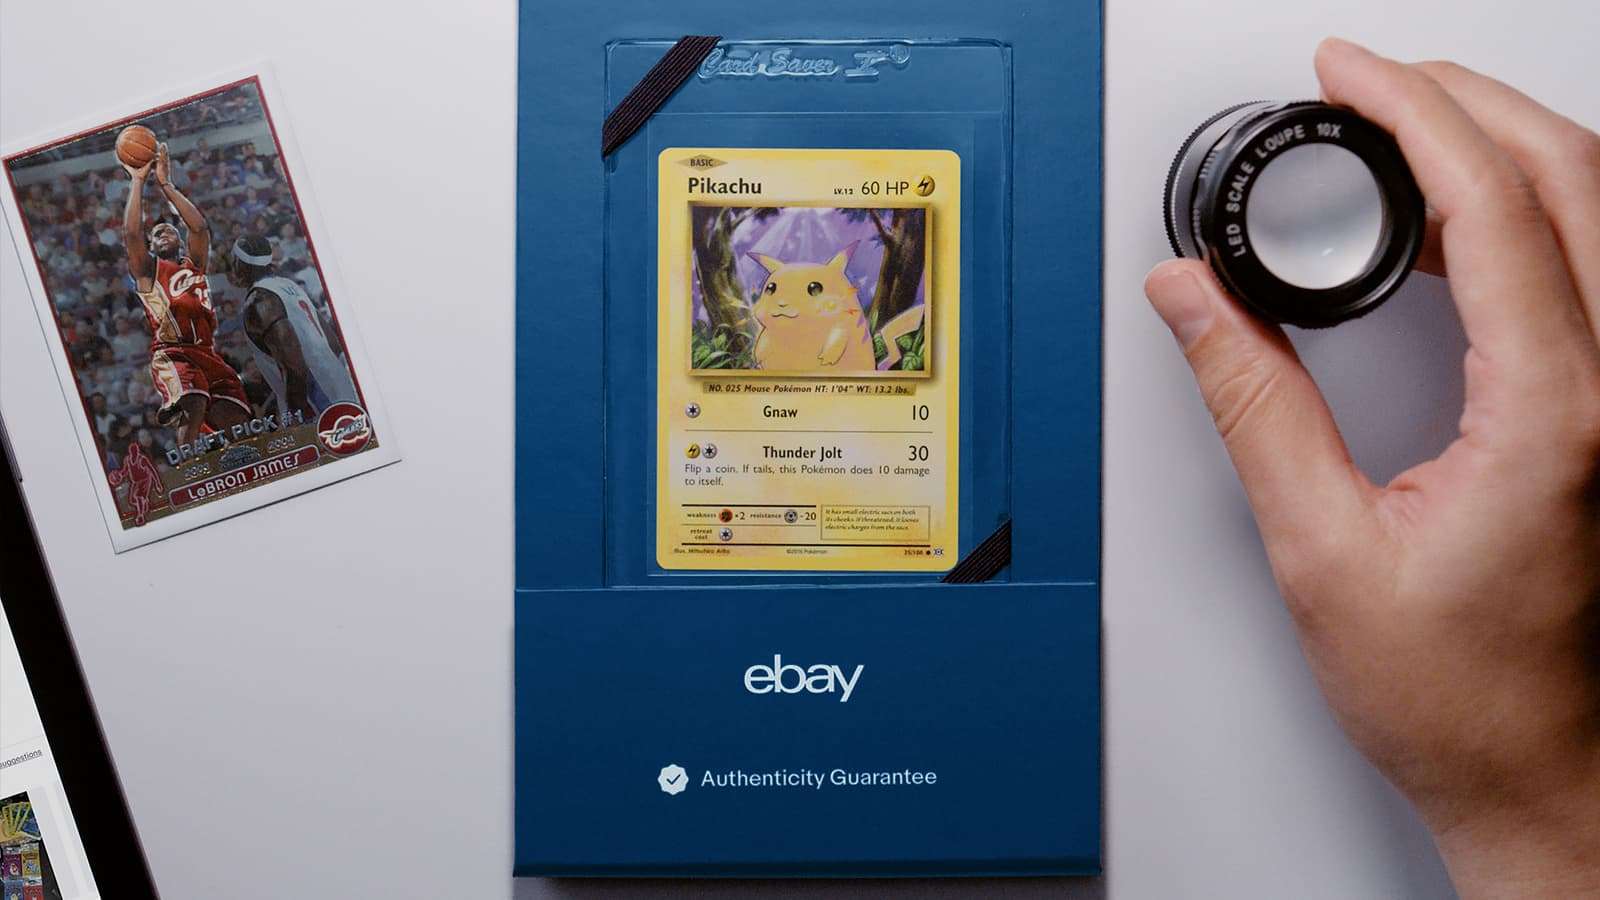 eBay authenticity guaranteed Pokemon Card Pikachu screenshot.